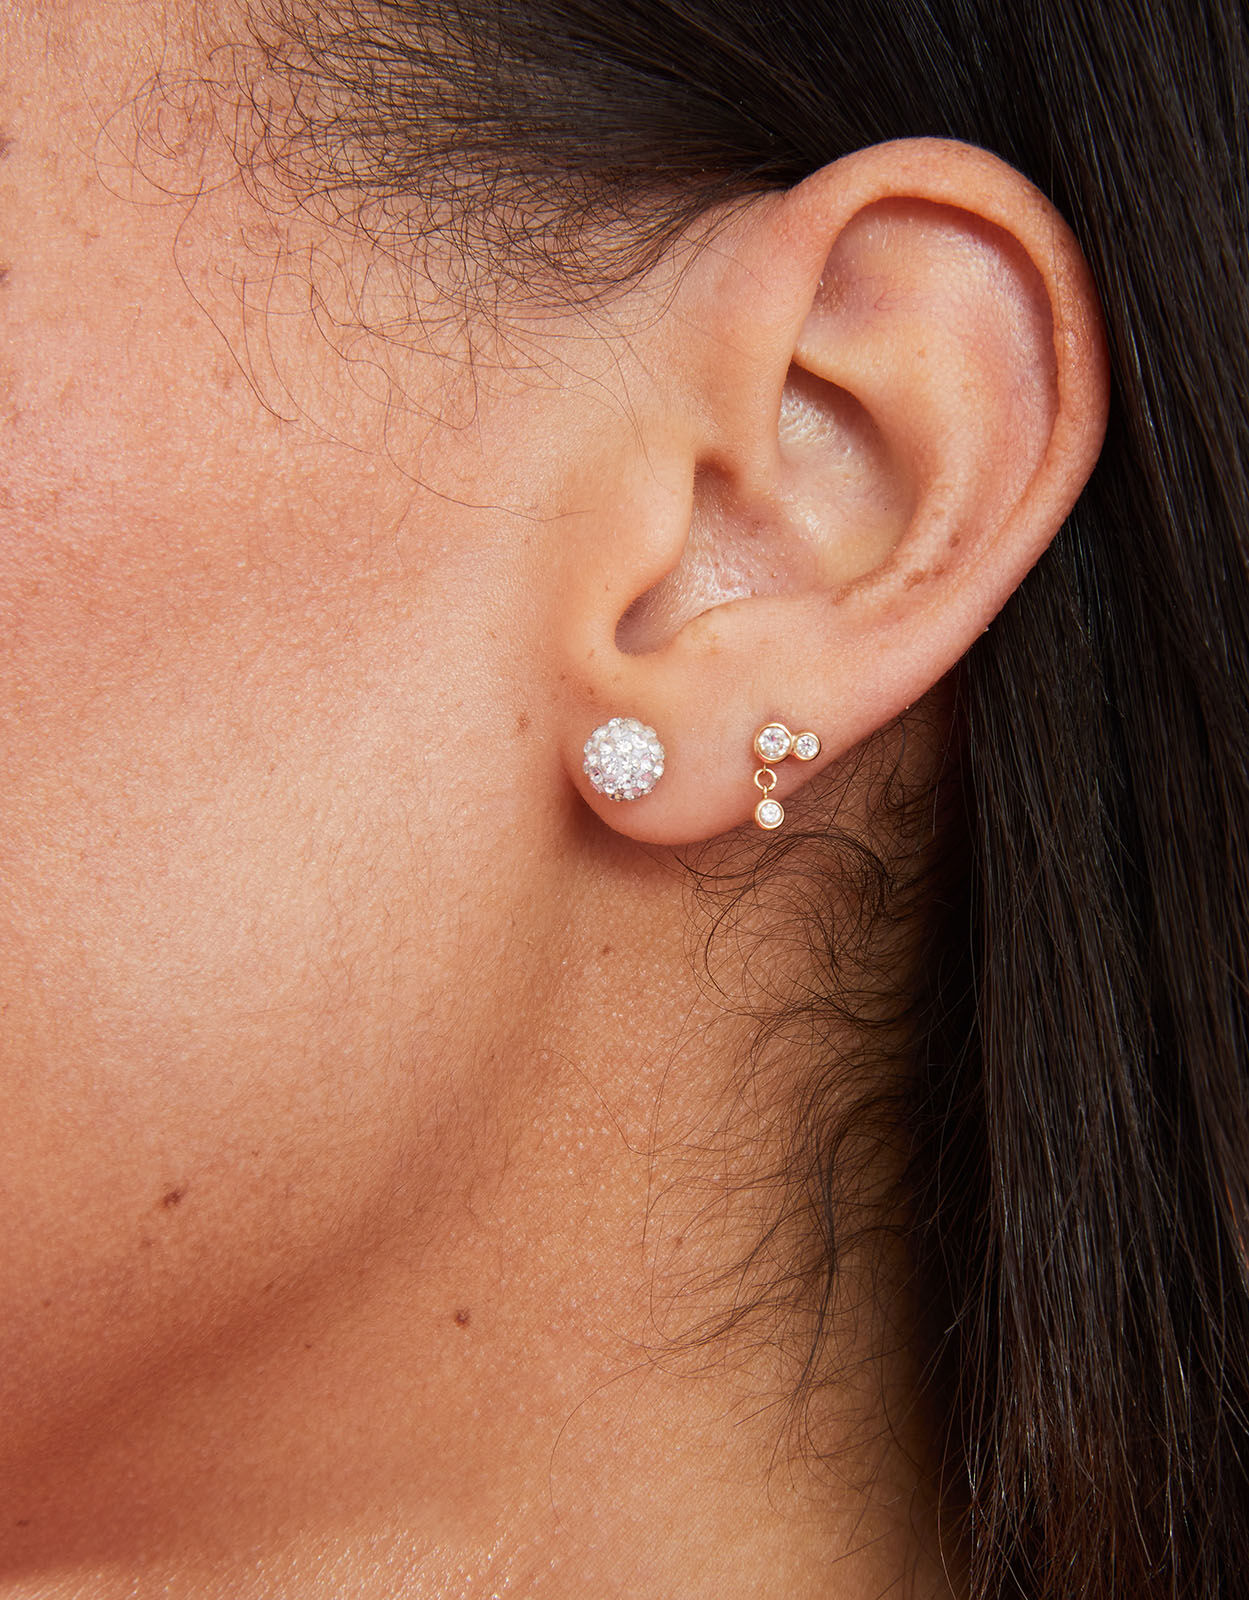 Exclusive 925 sterling silver handmade hook earrings with elegant fancy  girls hoops earring brides jewelry from india ear1085  TRIBAL ORNAMENTS